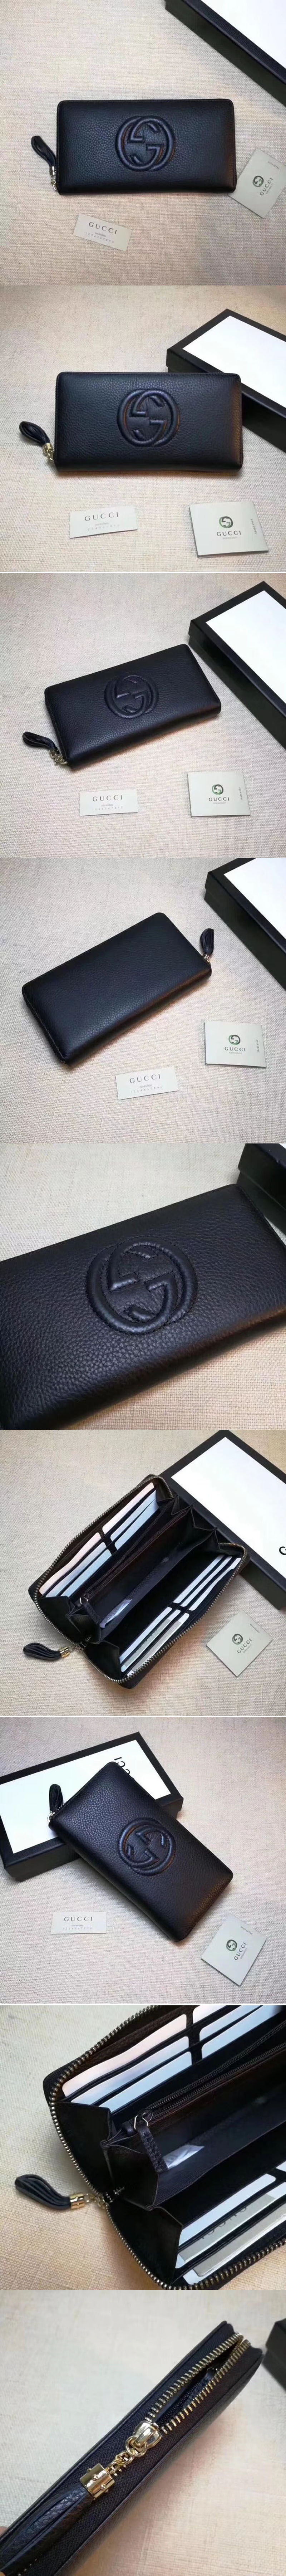 Replica Gucci 308004 Soho Original Leather Zip Around Wallets Black